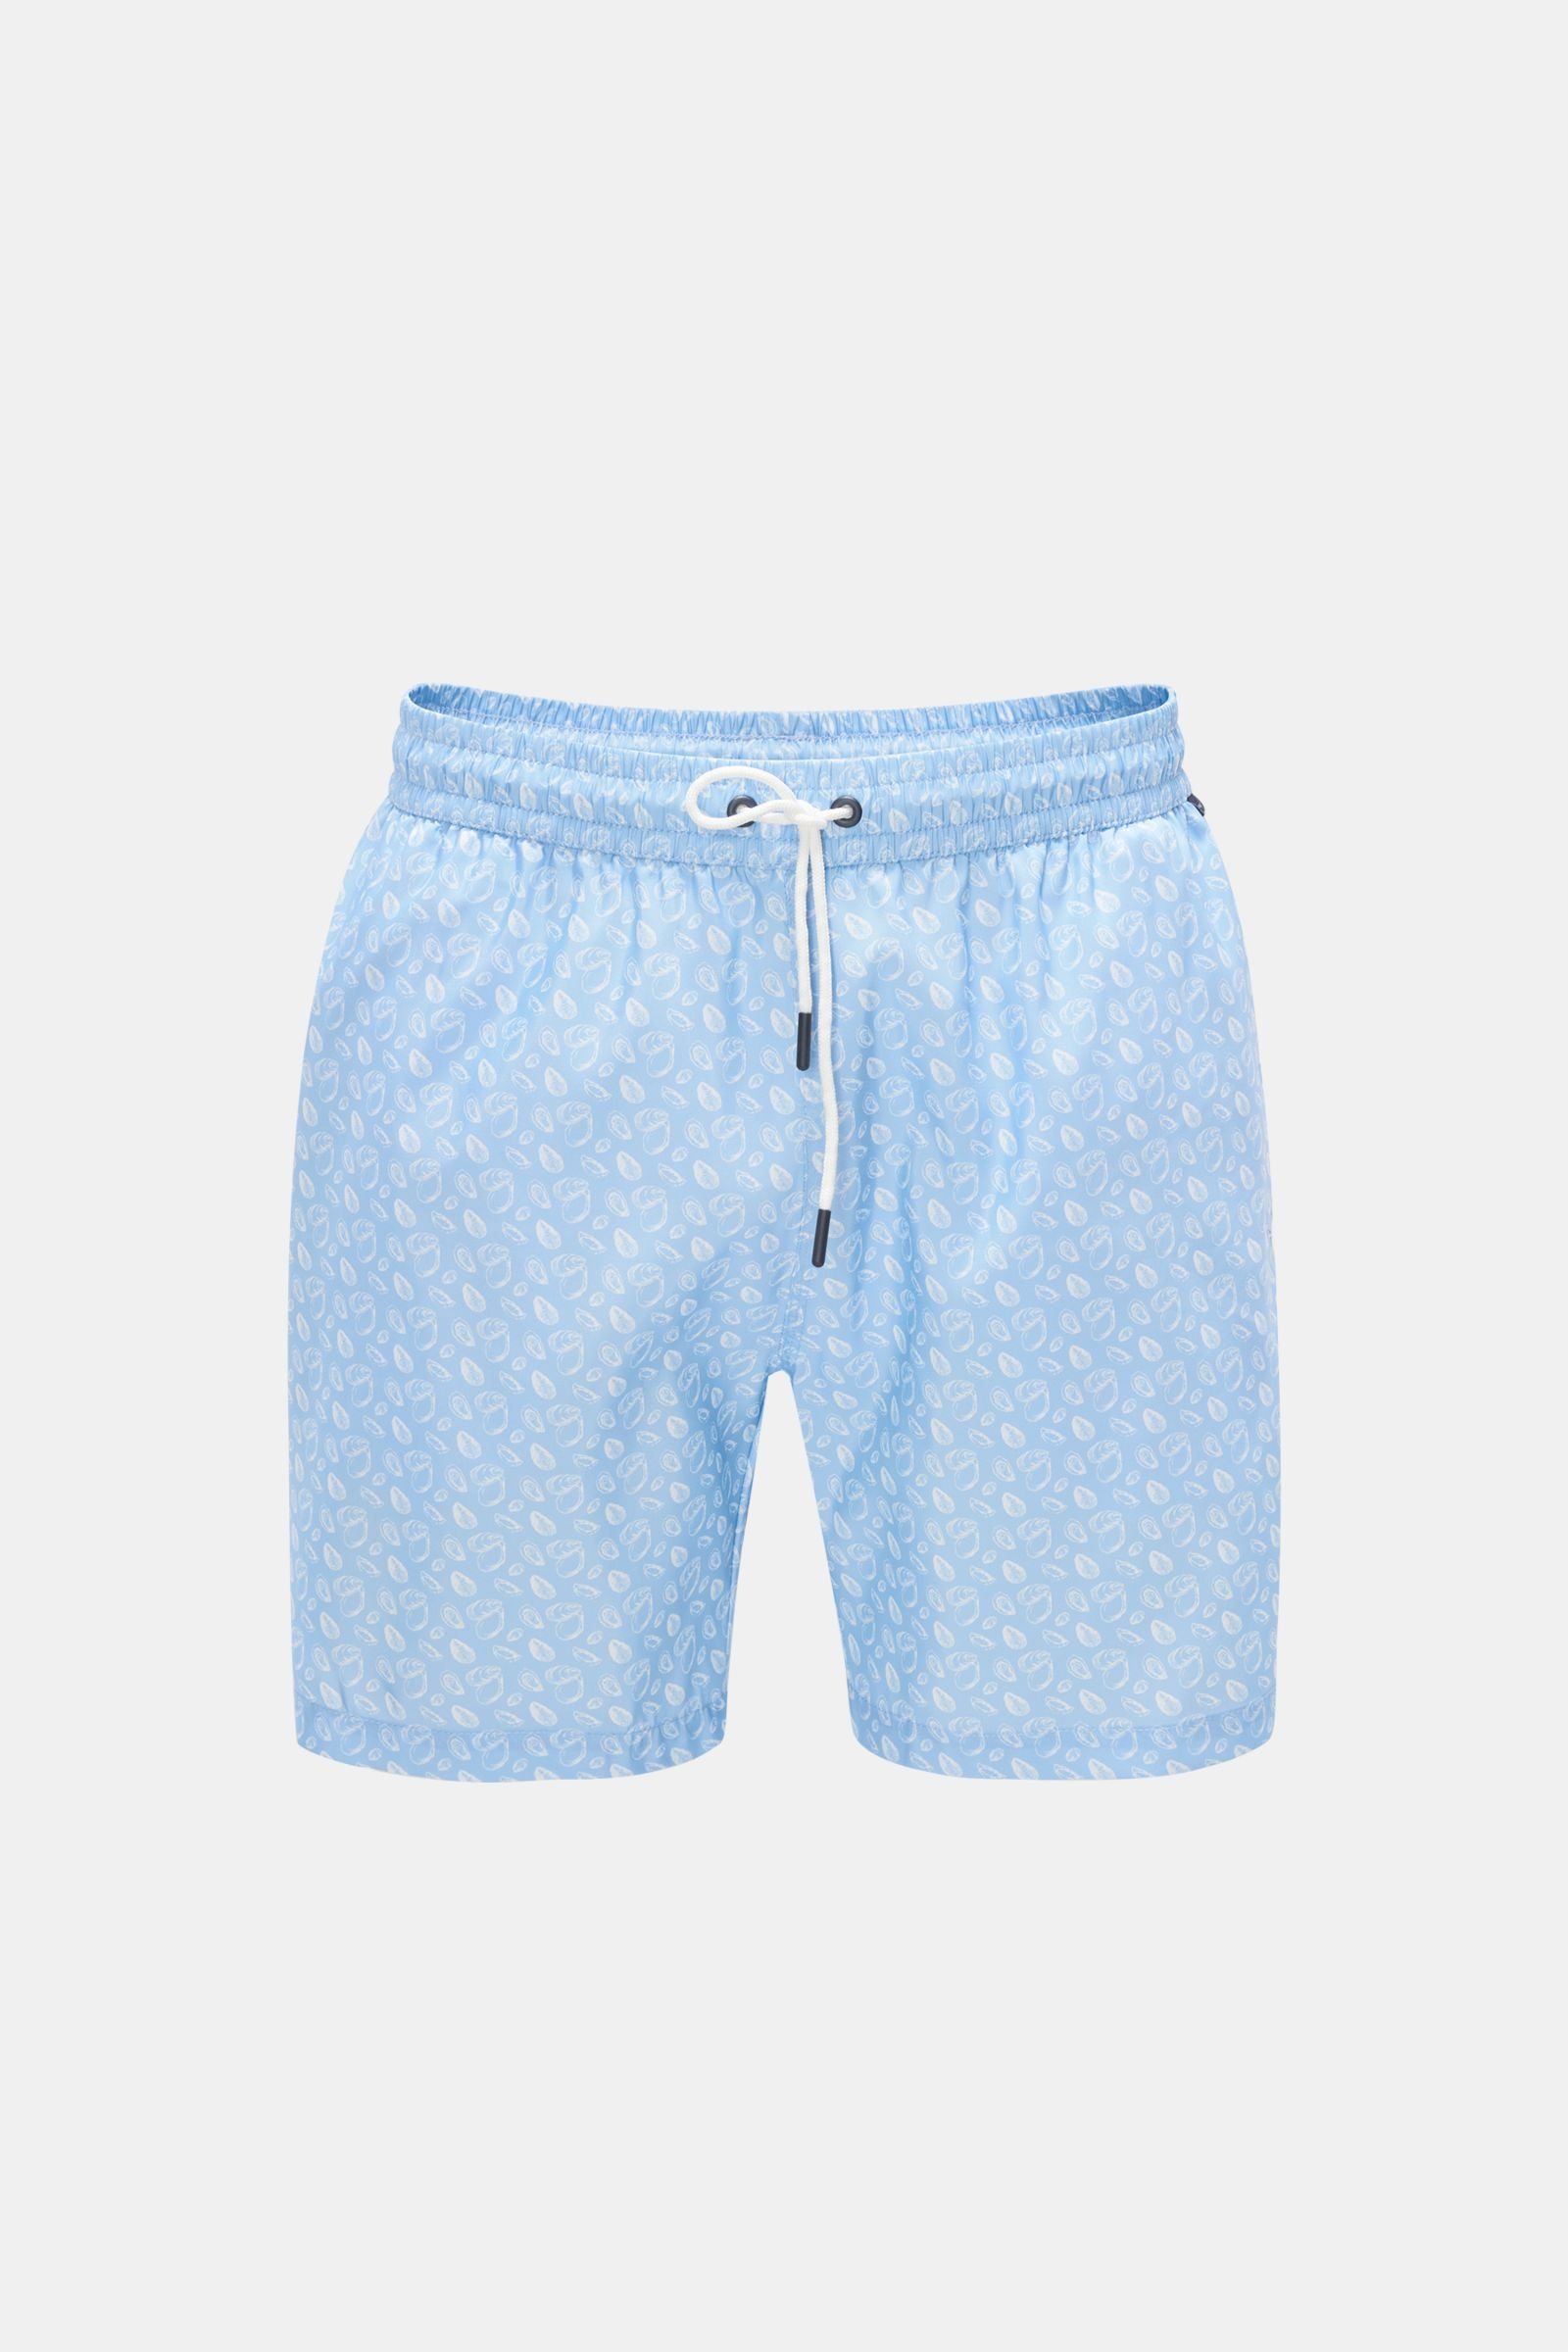 Swim shorts 'Oyster Swim' light blue/white patterned